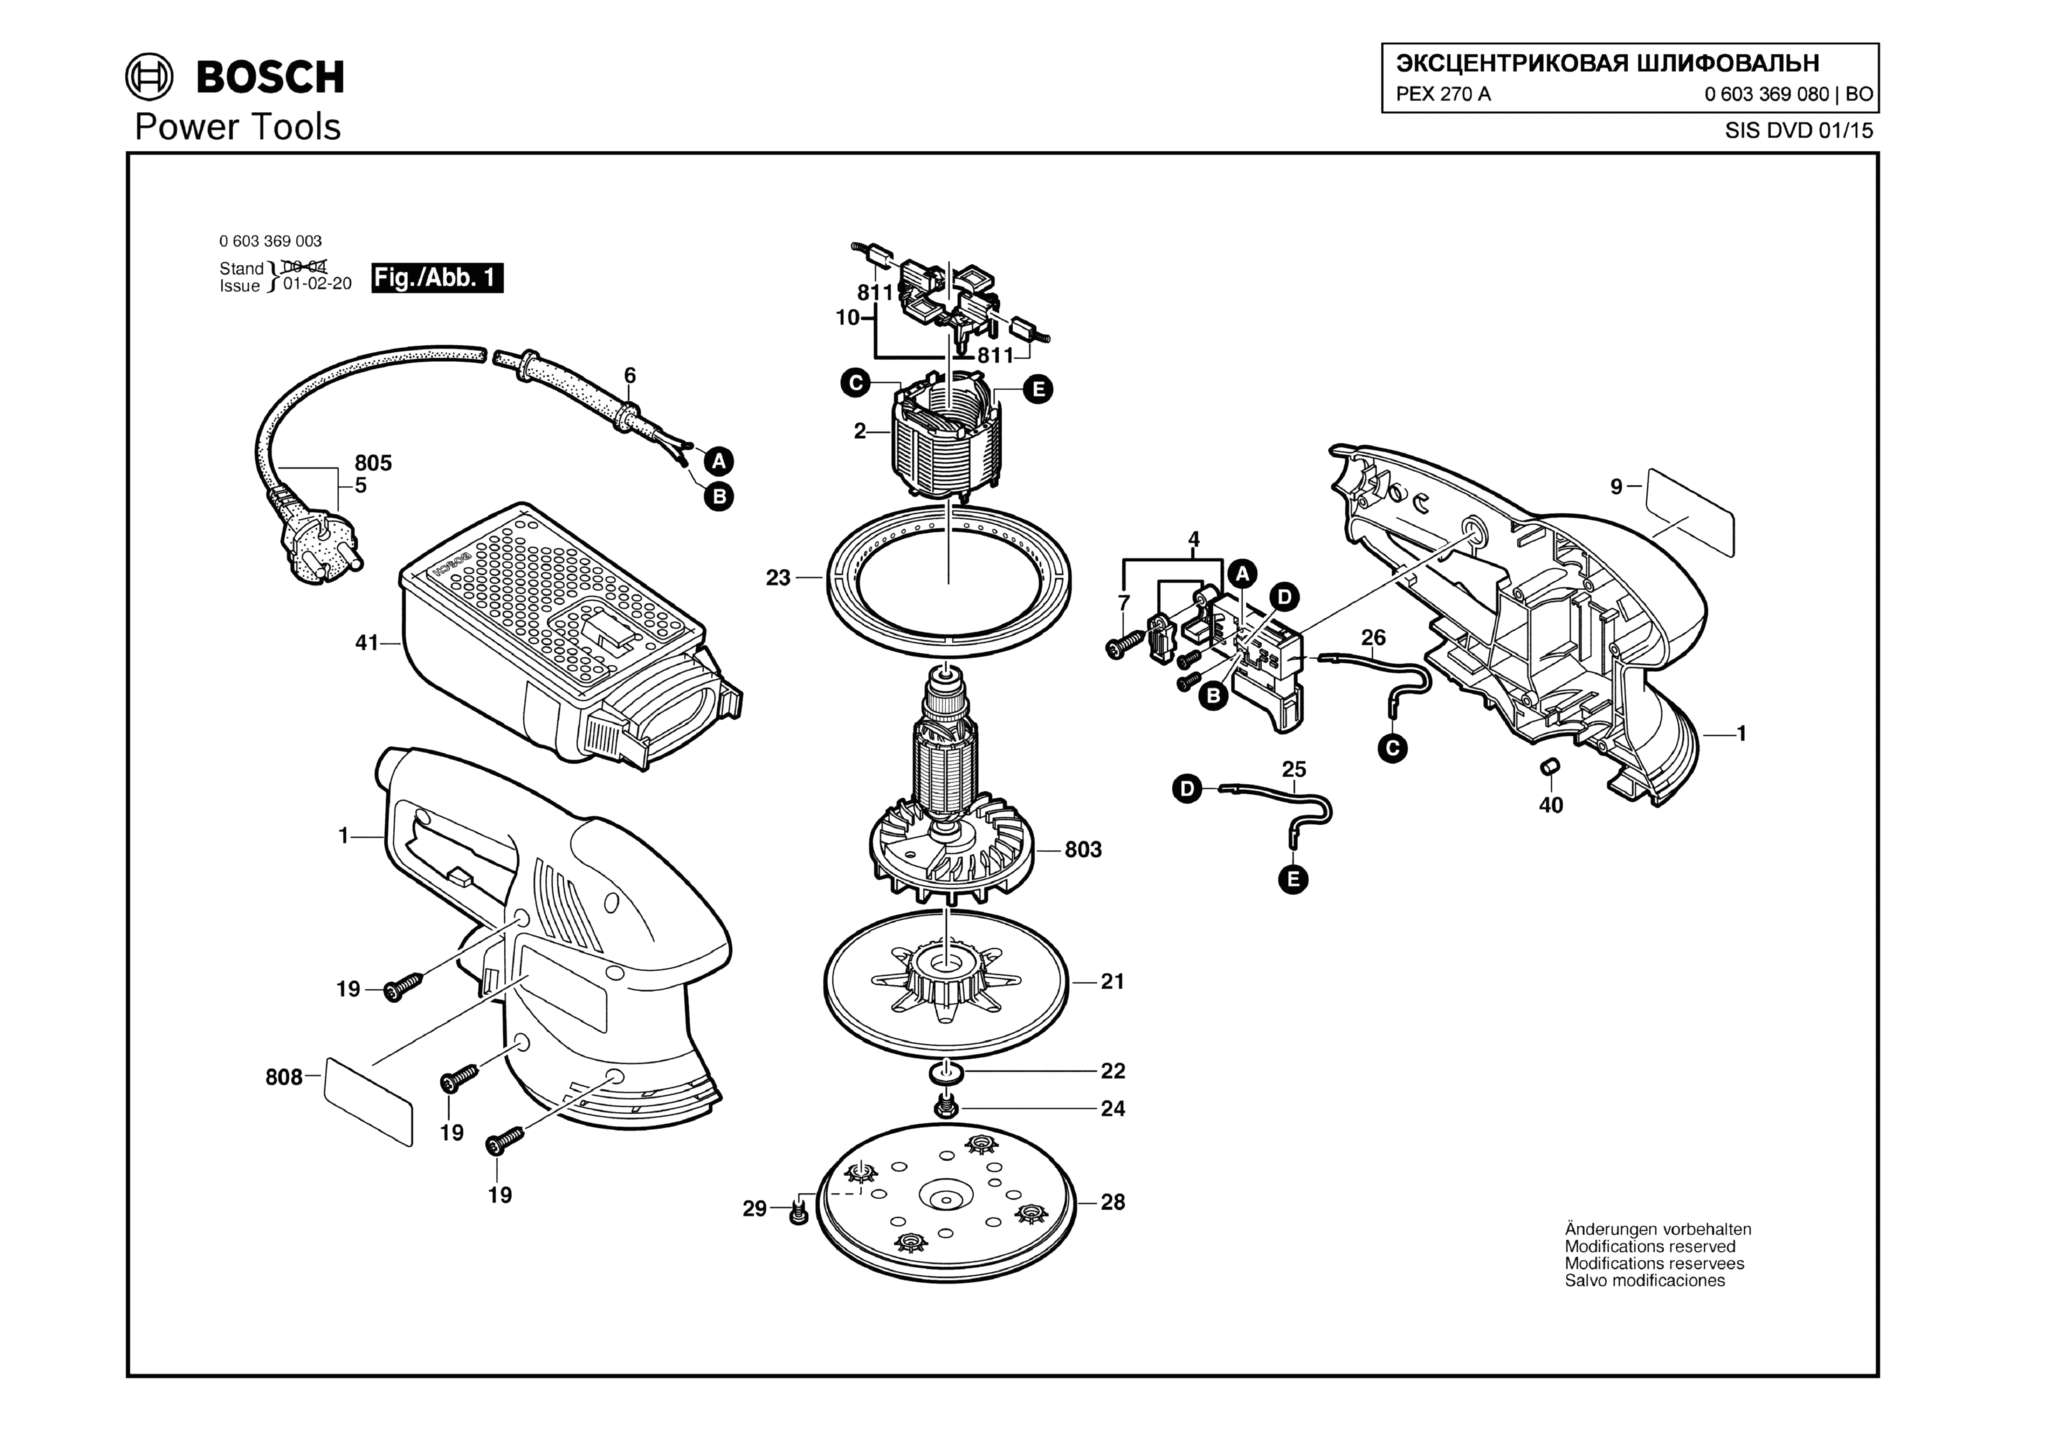 Запчасти, схема и деталировка Bosch PEX 270 A (ТИП 0603369080)